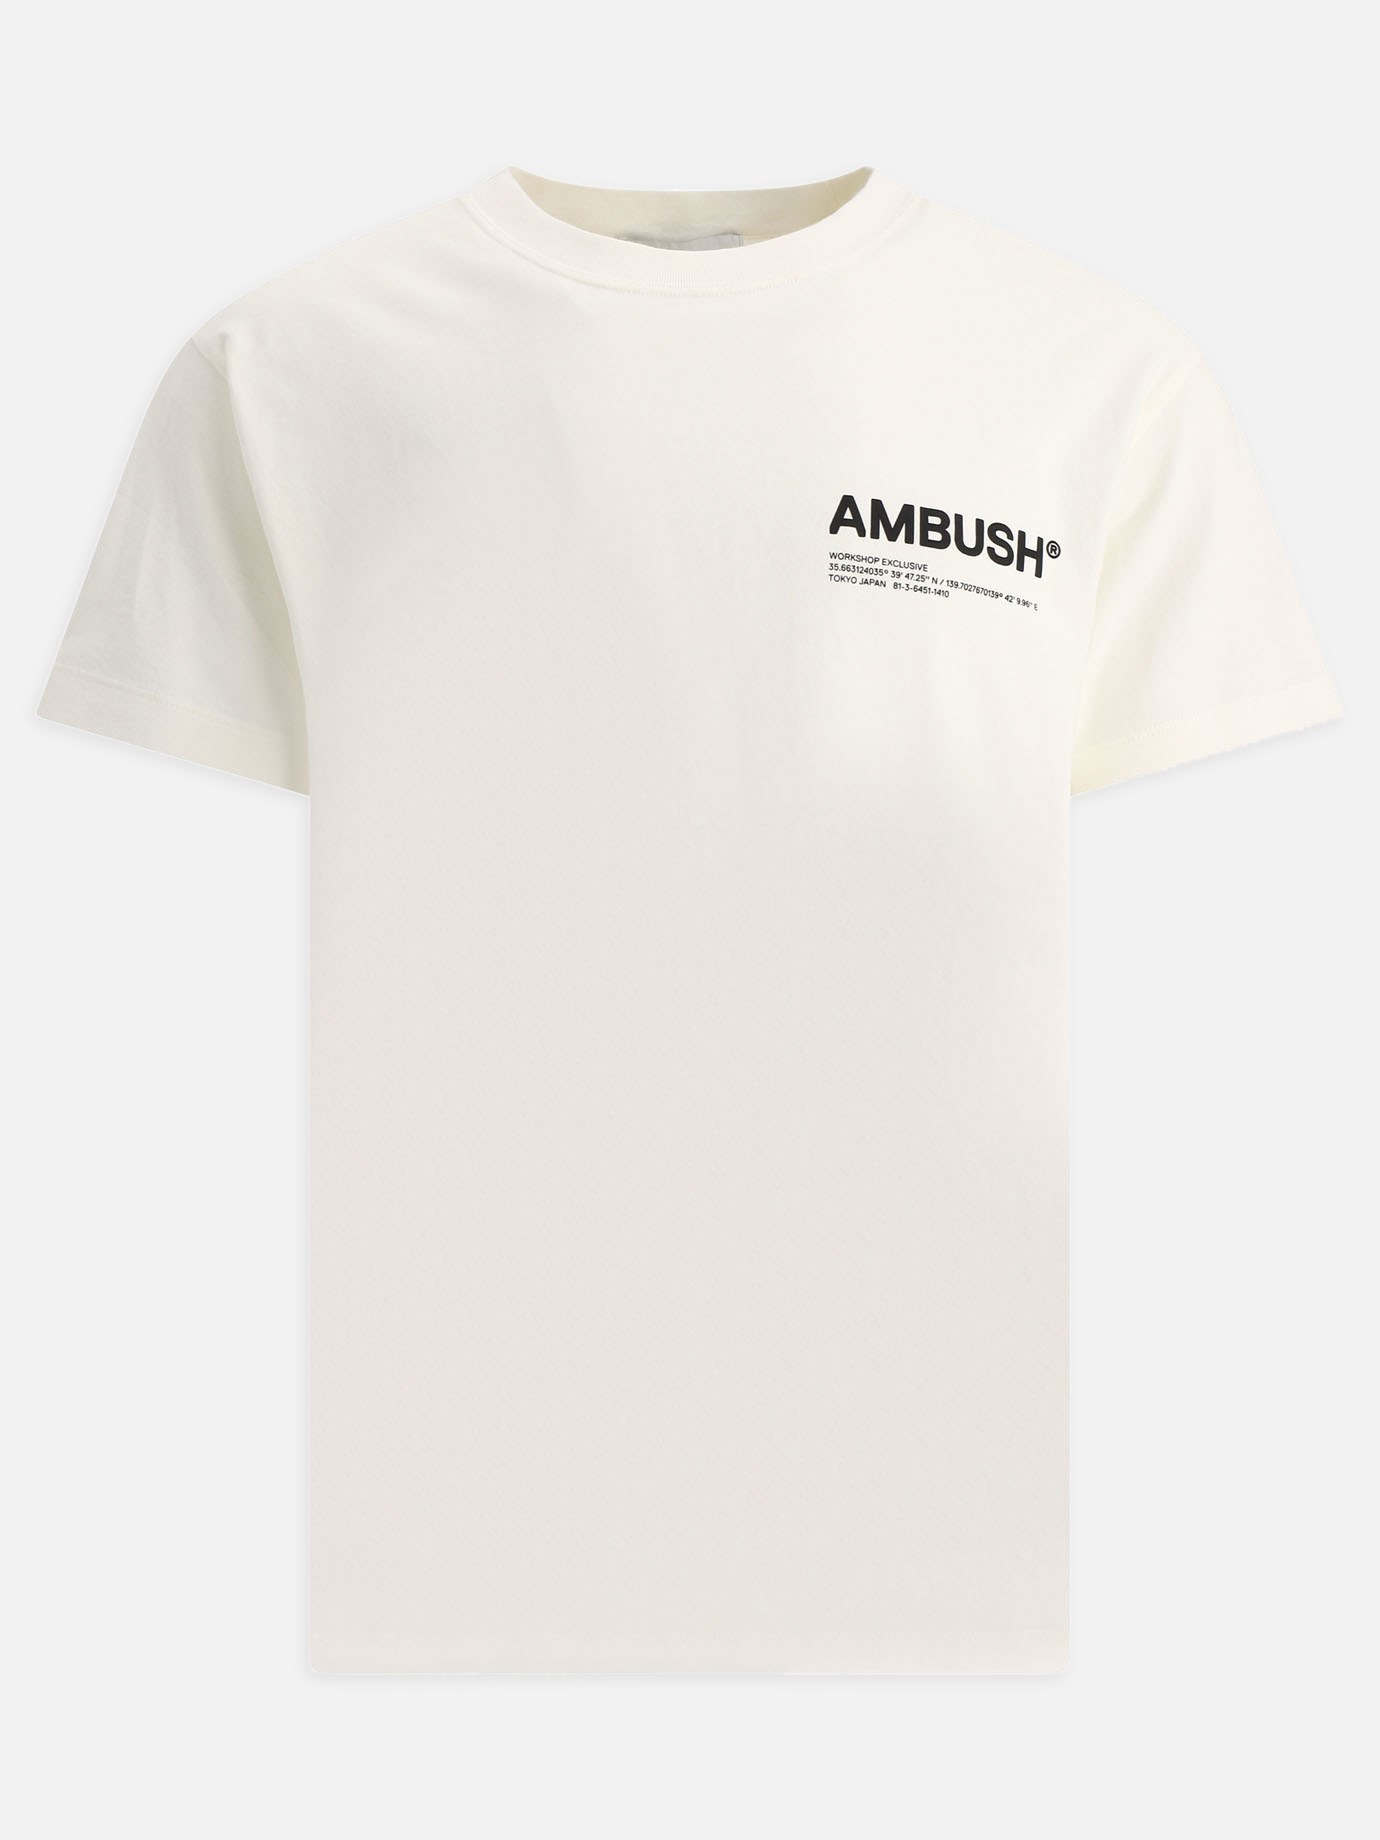  Workshop  t-shirtby Ambush - 5